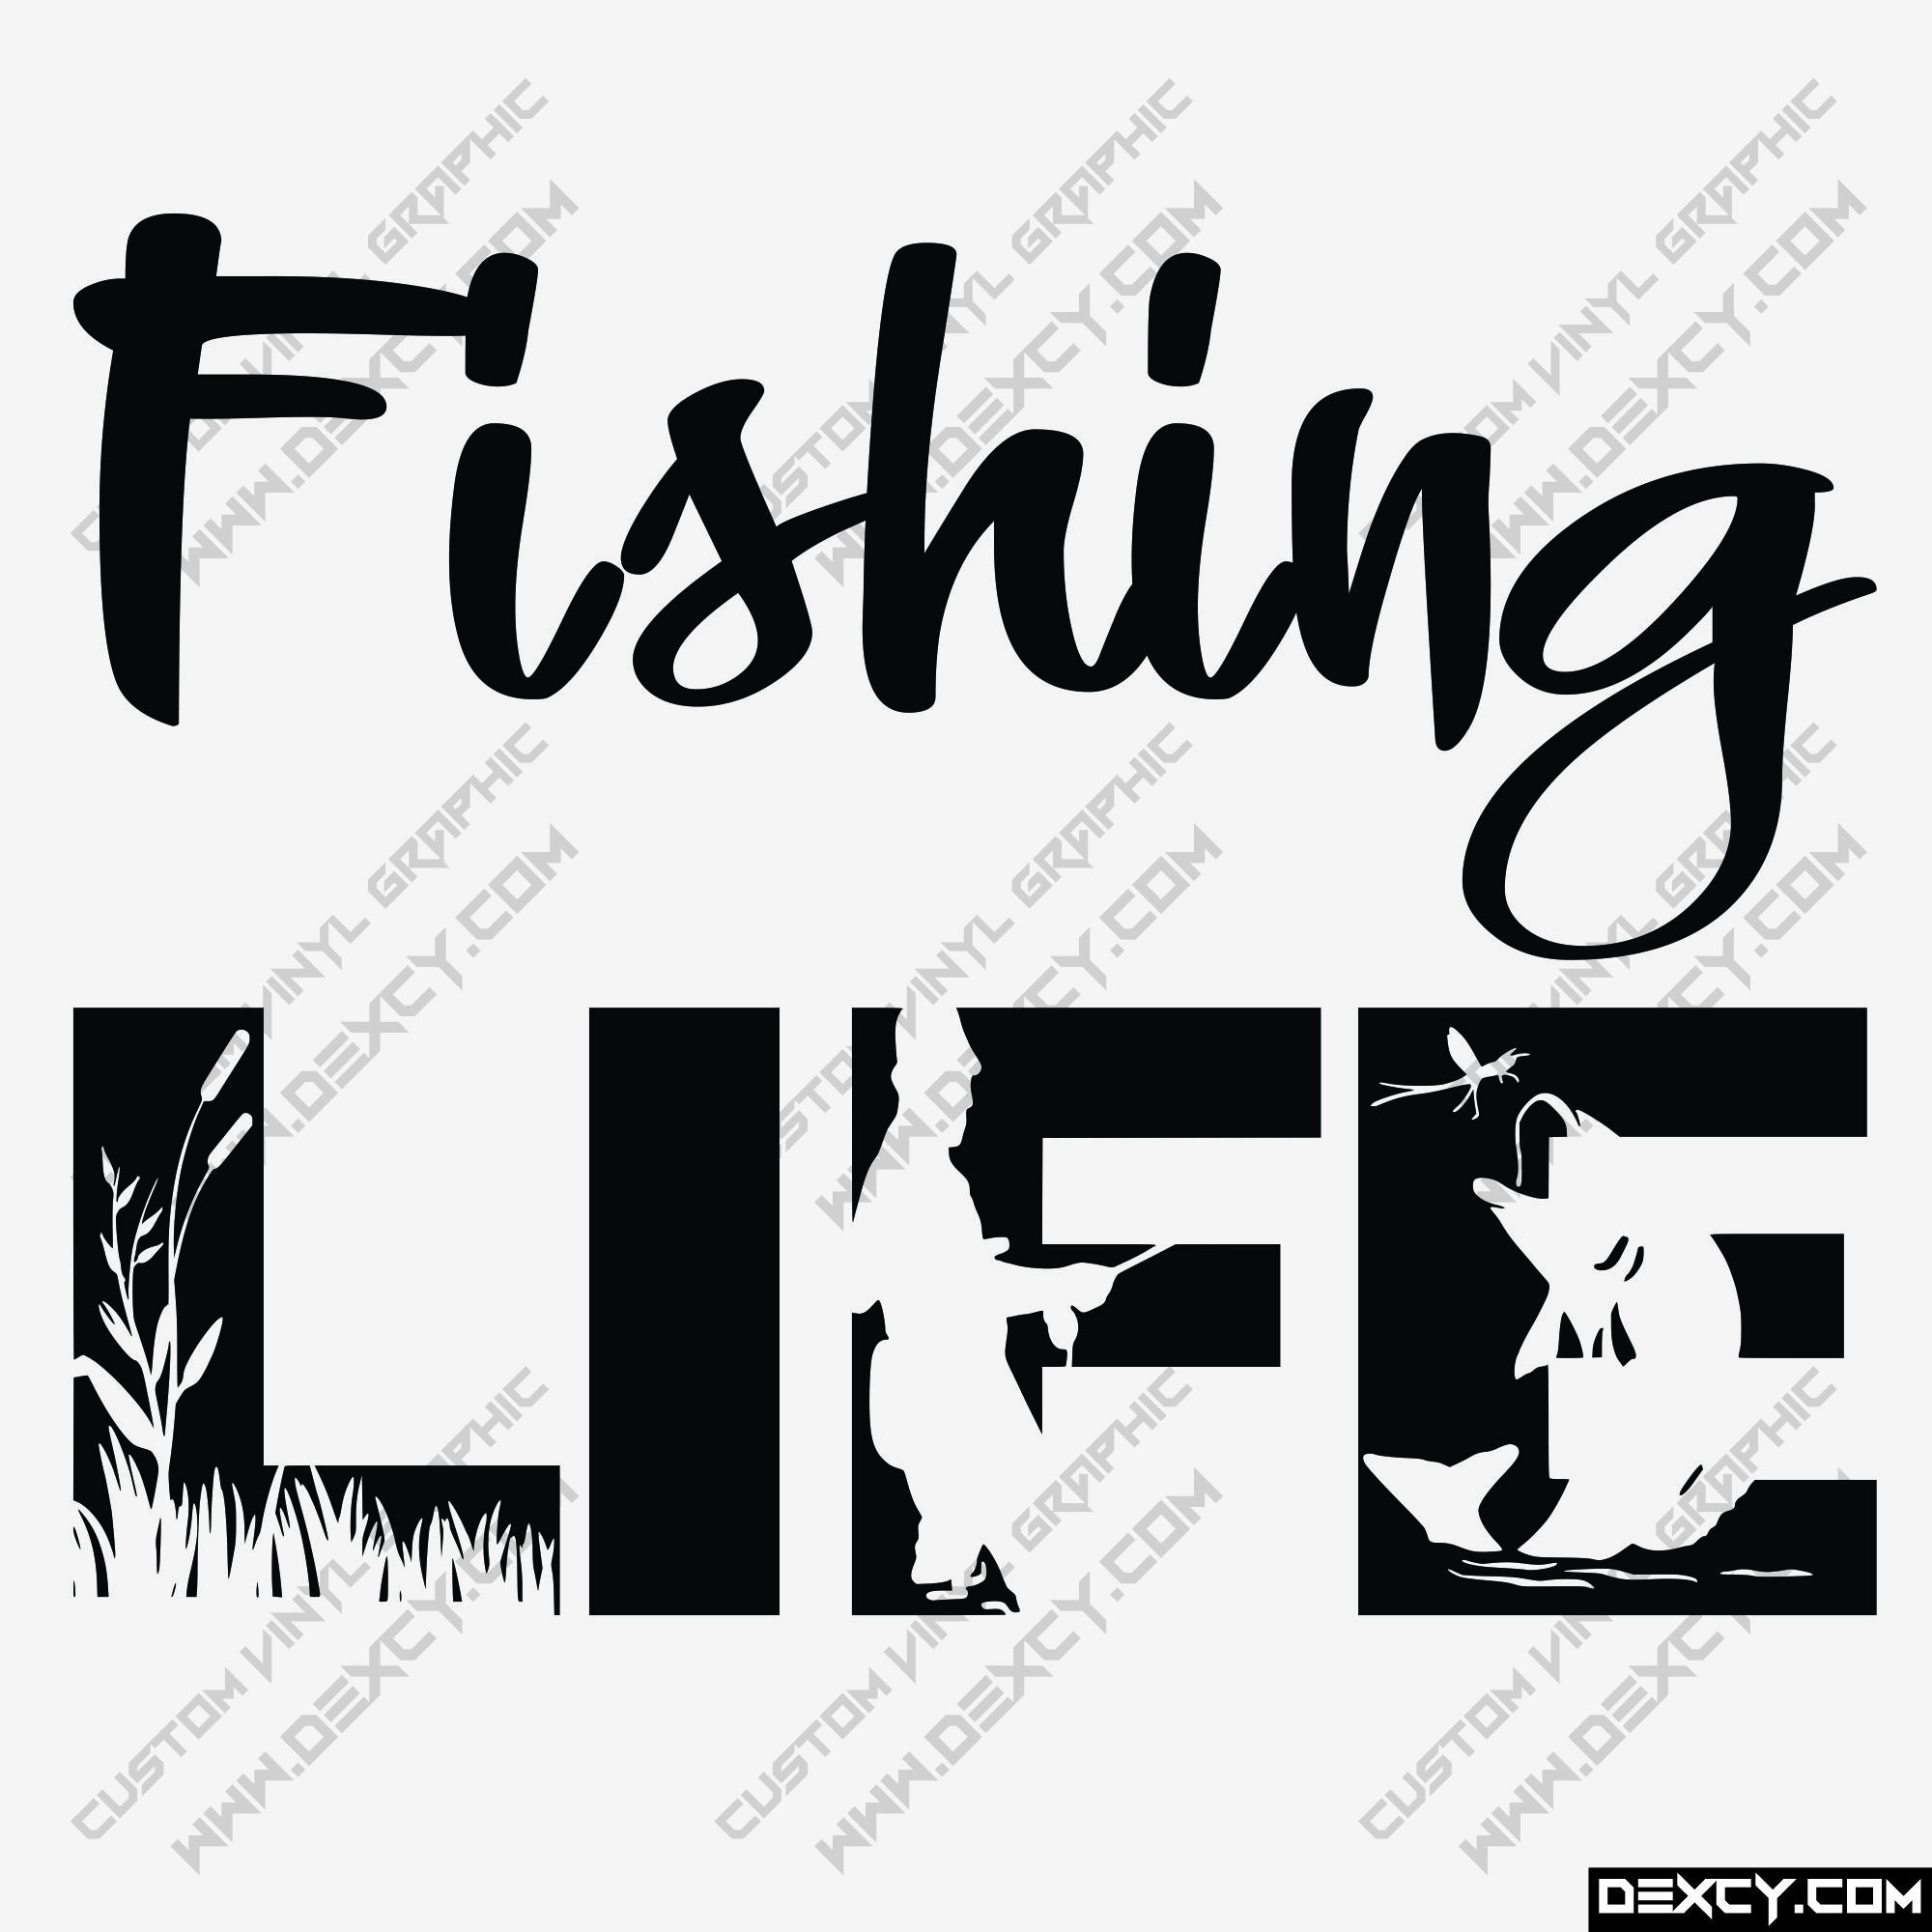 Fishing Life vinyl decal, Fishing Vinyl Decal Sticker Custom Outdoor Vinyl  Decal Sticker Car Truck Boat Windows Doors Walls